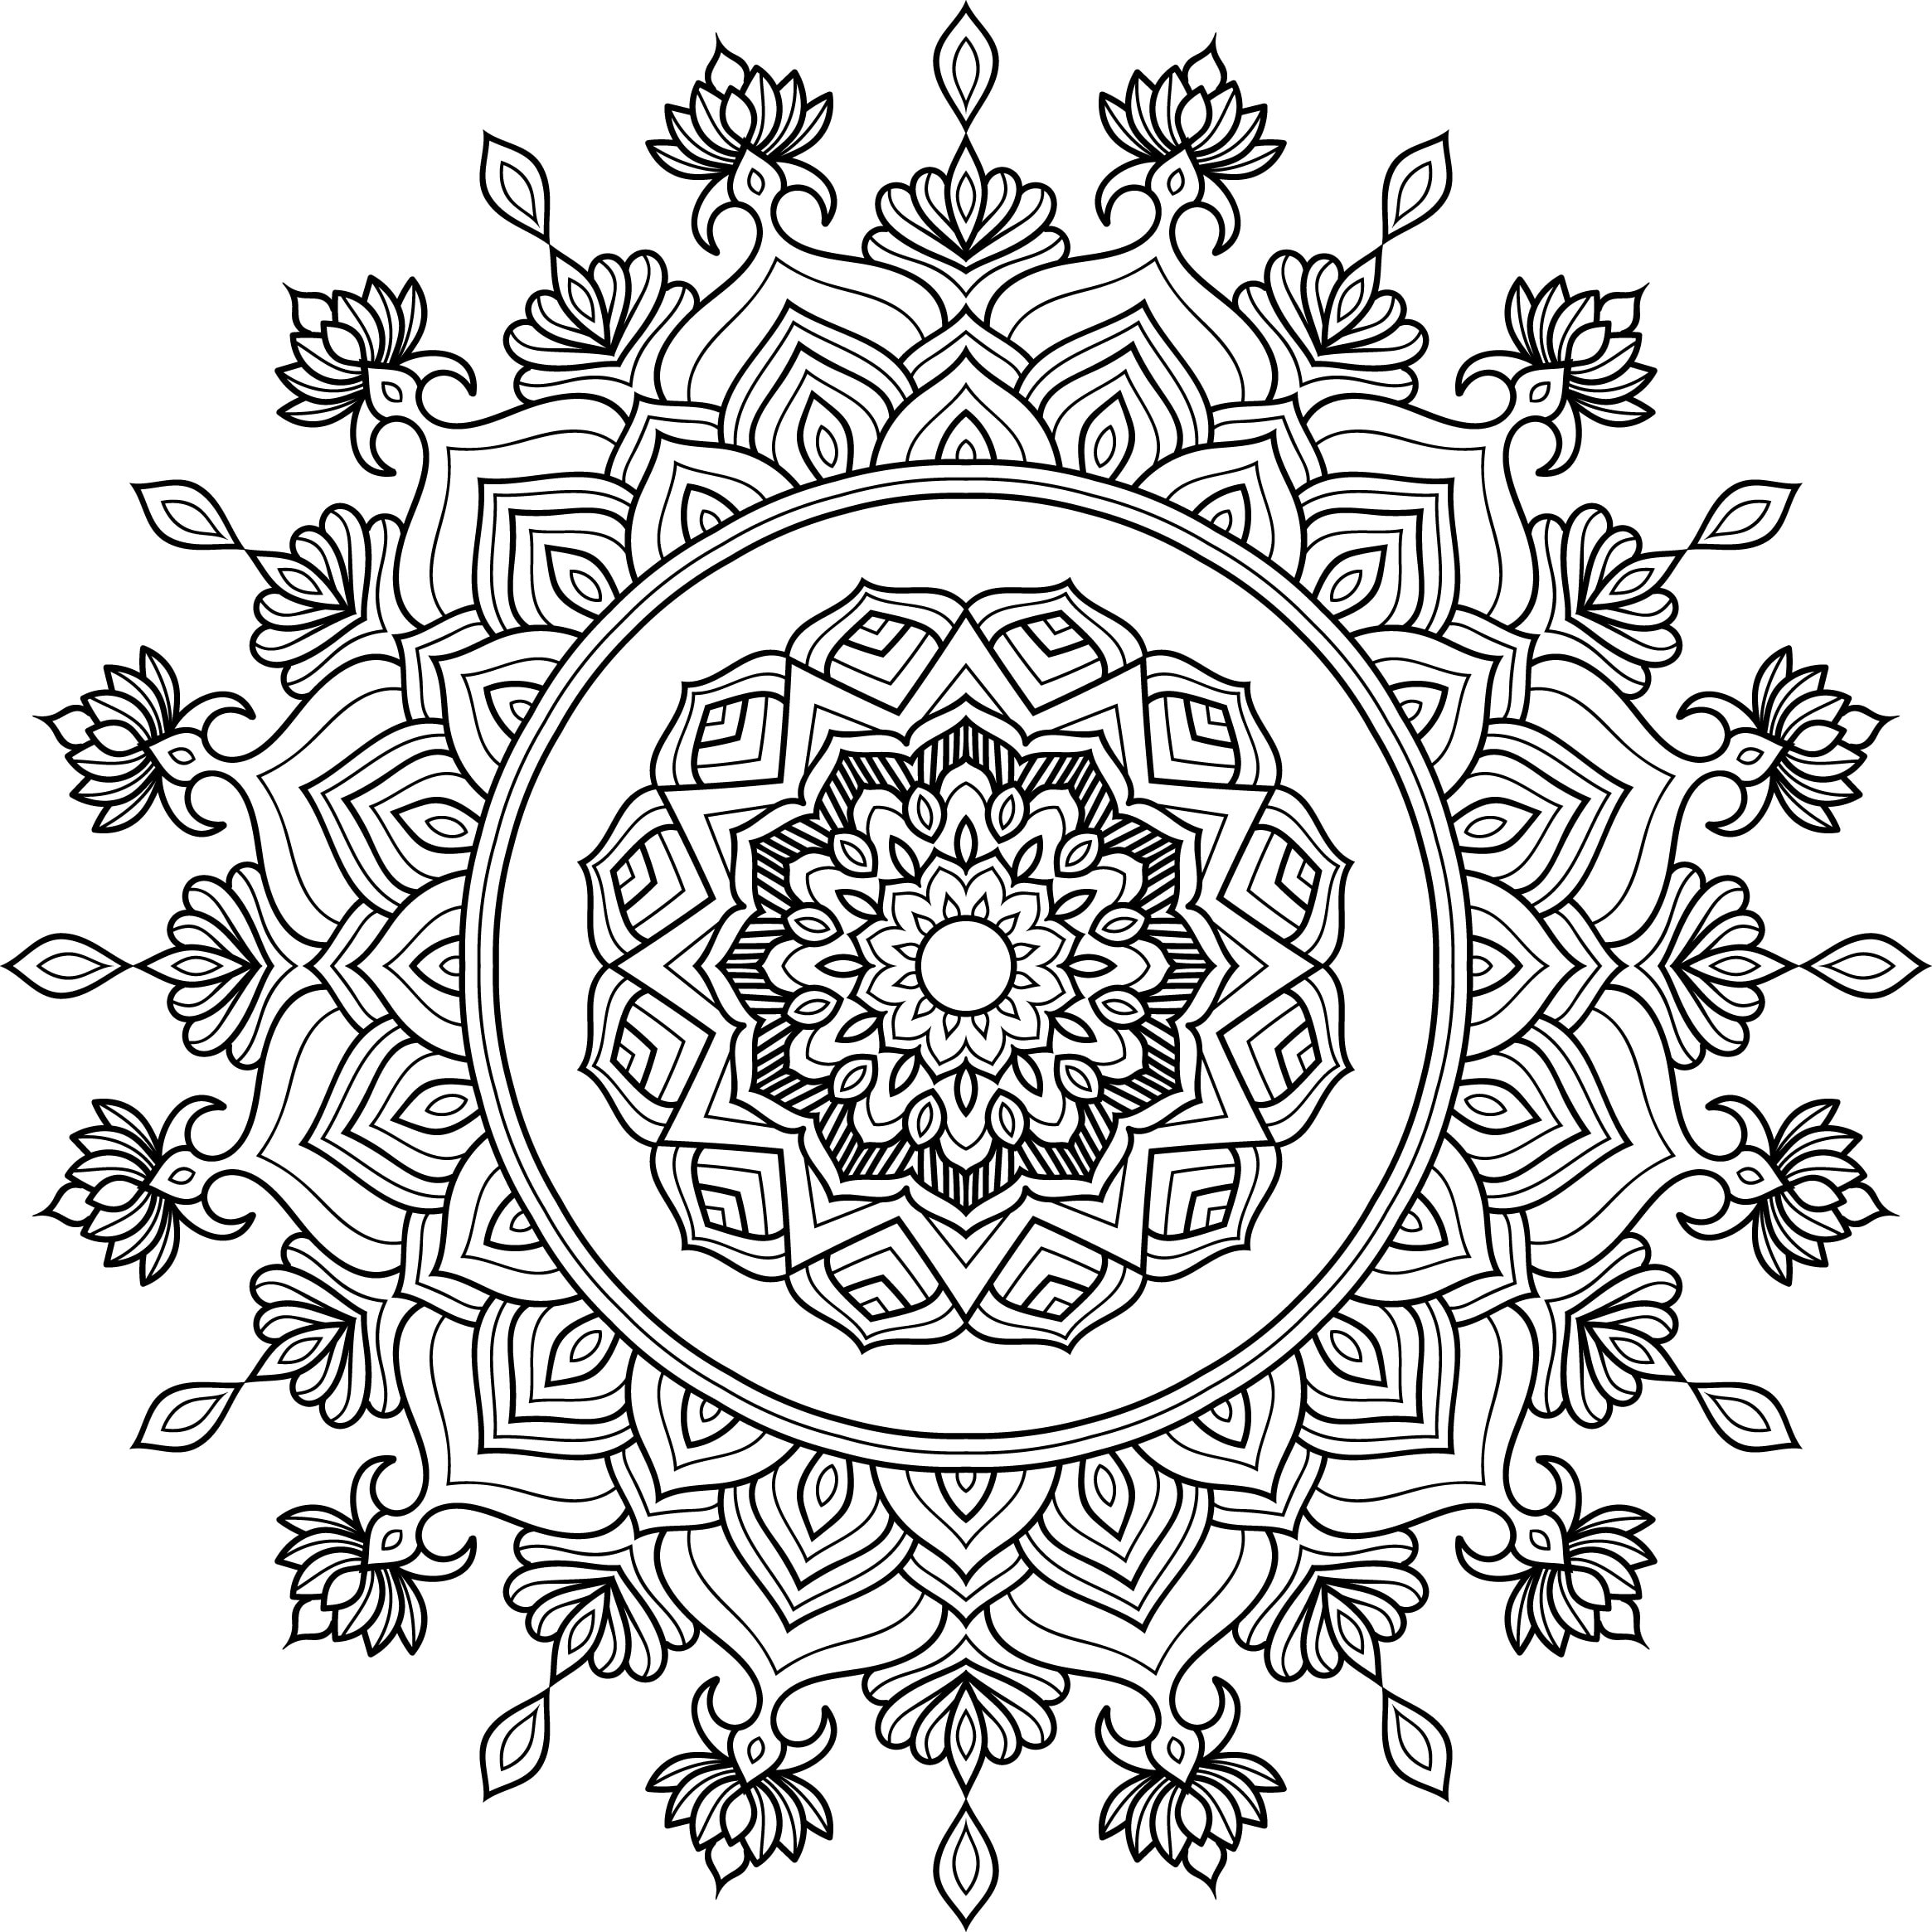 10 Bulk Mandala Adult Coloring Page KDP Graphic by zohuraakter524